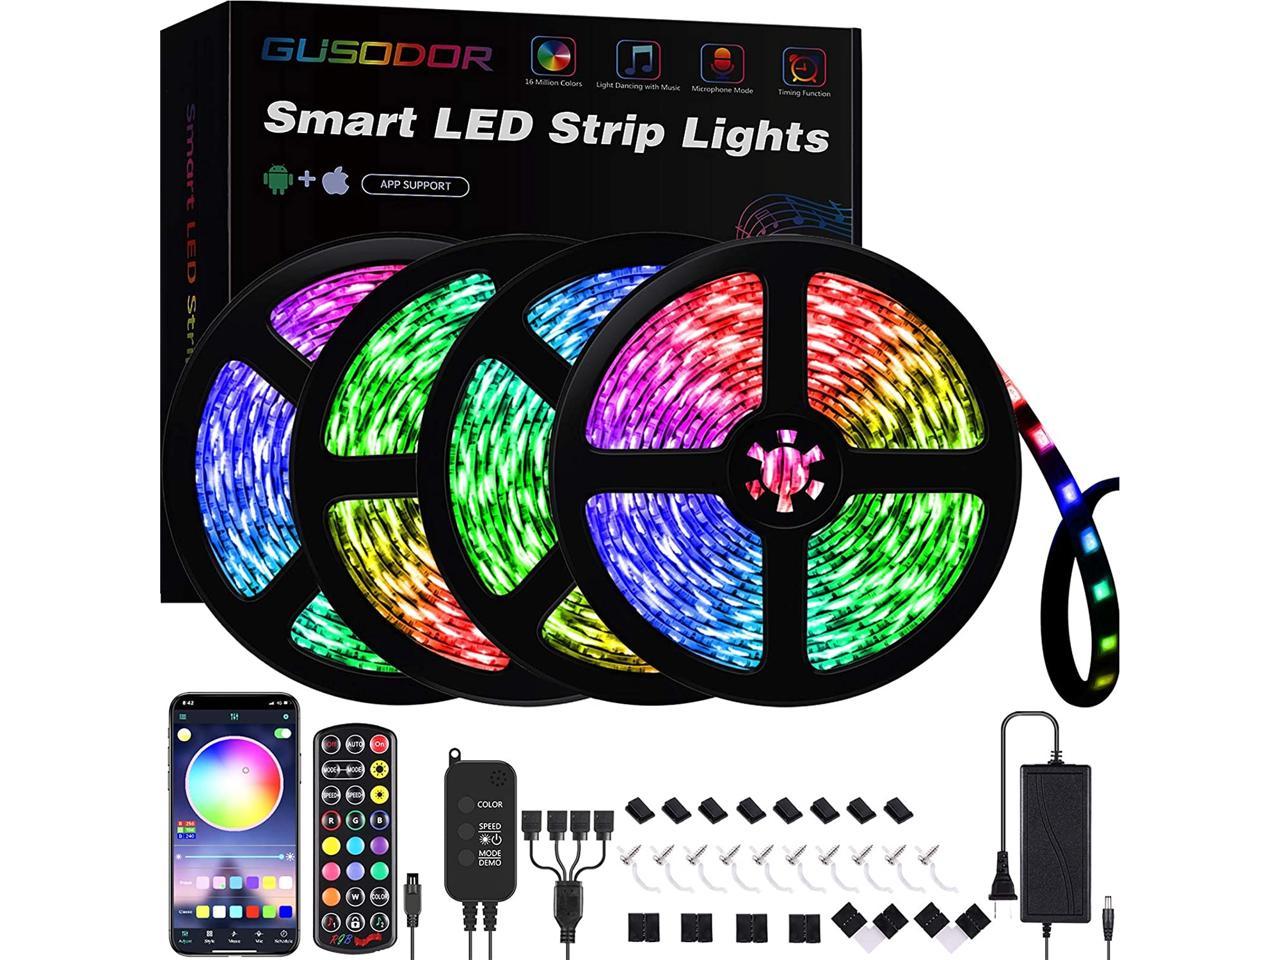 Gusodor Led Strip Lights 65.6 Feet Led Lights Music Sync Smart Rope Lights Color Changing Timing 24 Key Remote App Control RGB Light DIY Colors Led Lights for Home